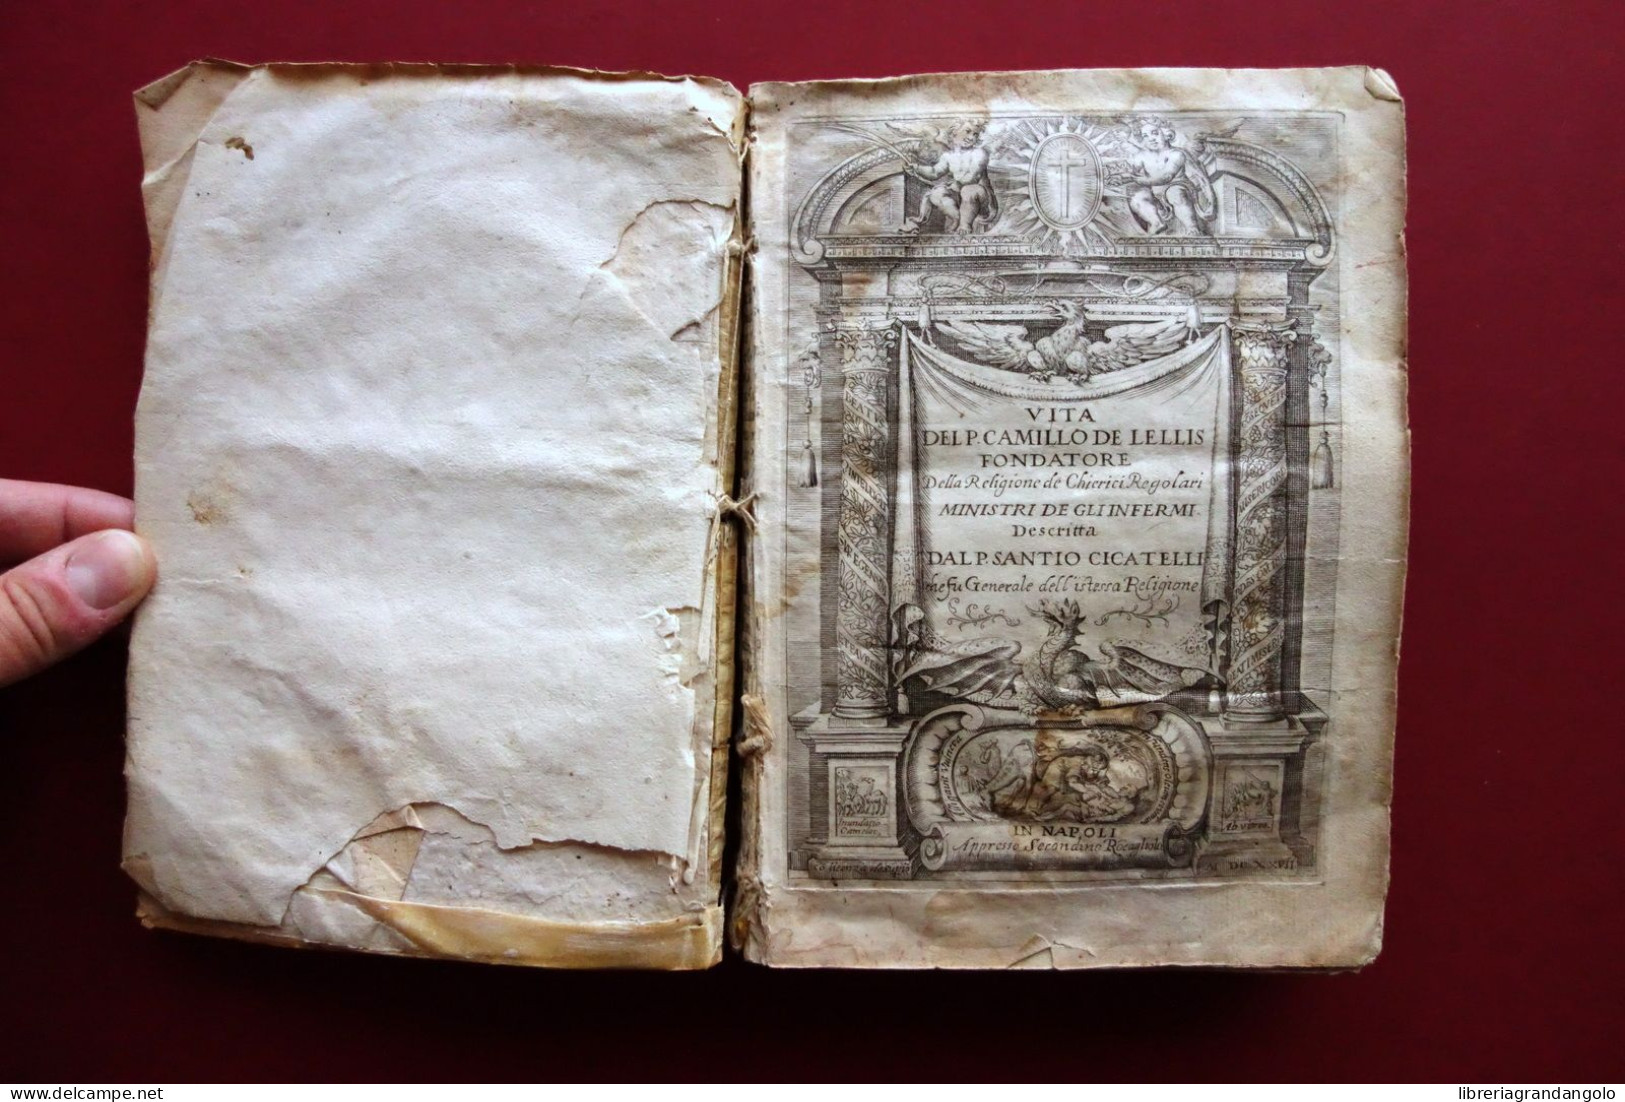 Vita del P. Camillo de Lellis Fondatore dei Chierici Regolari S. Cicatelli 1627